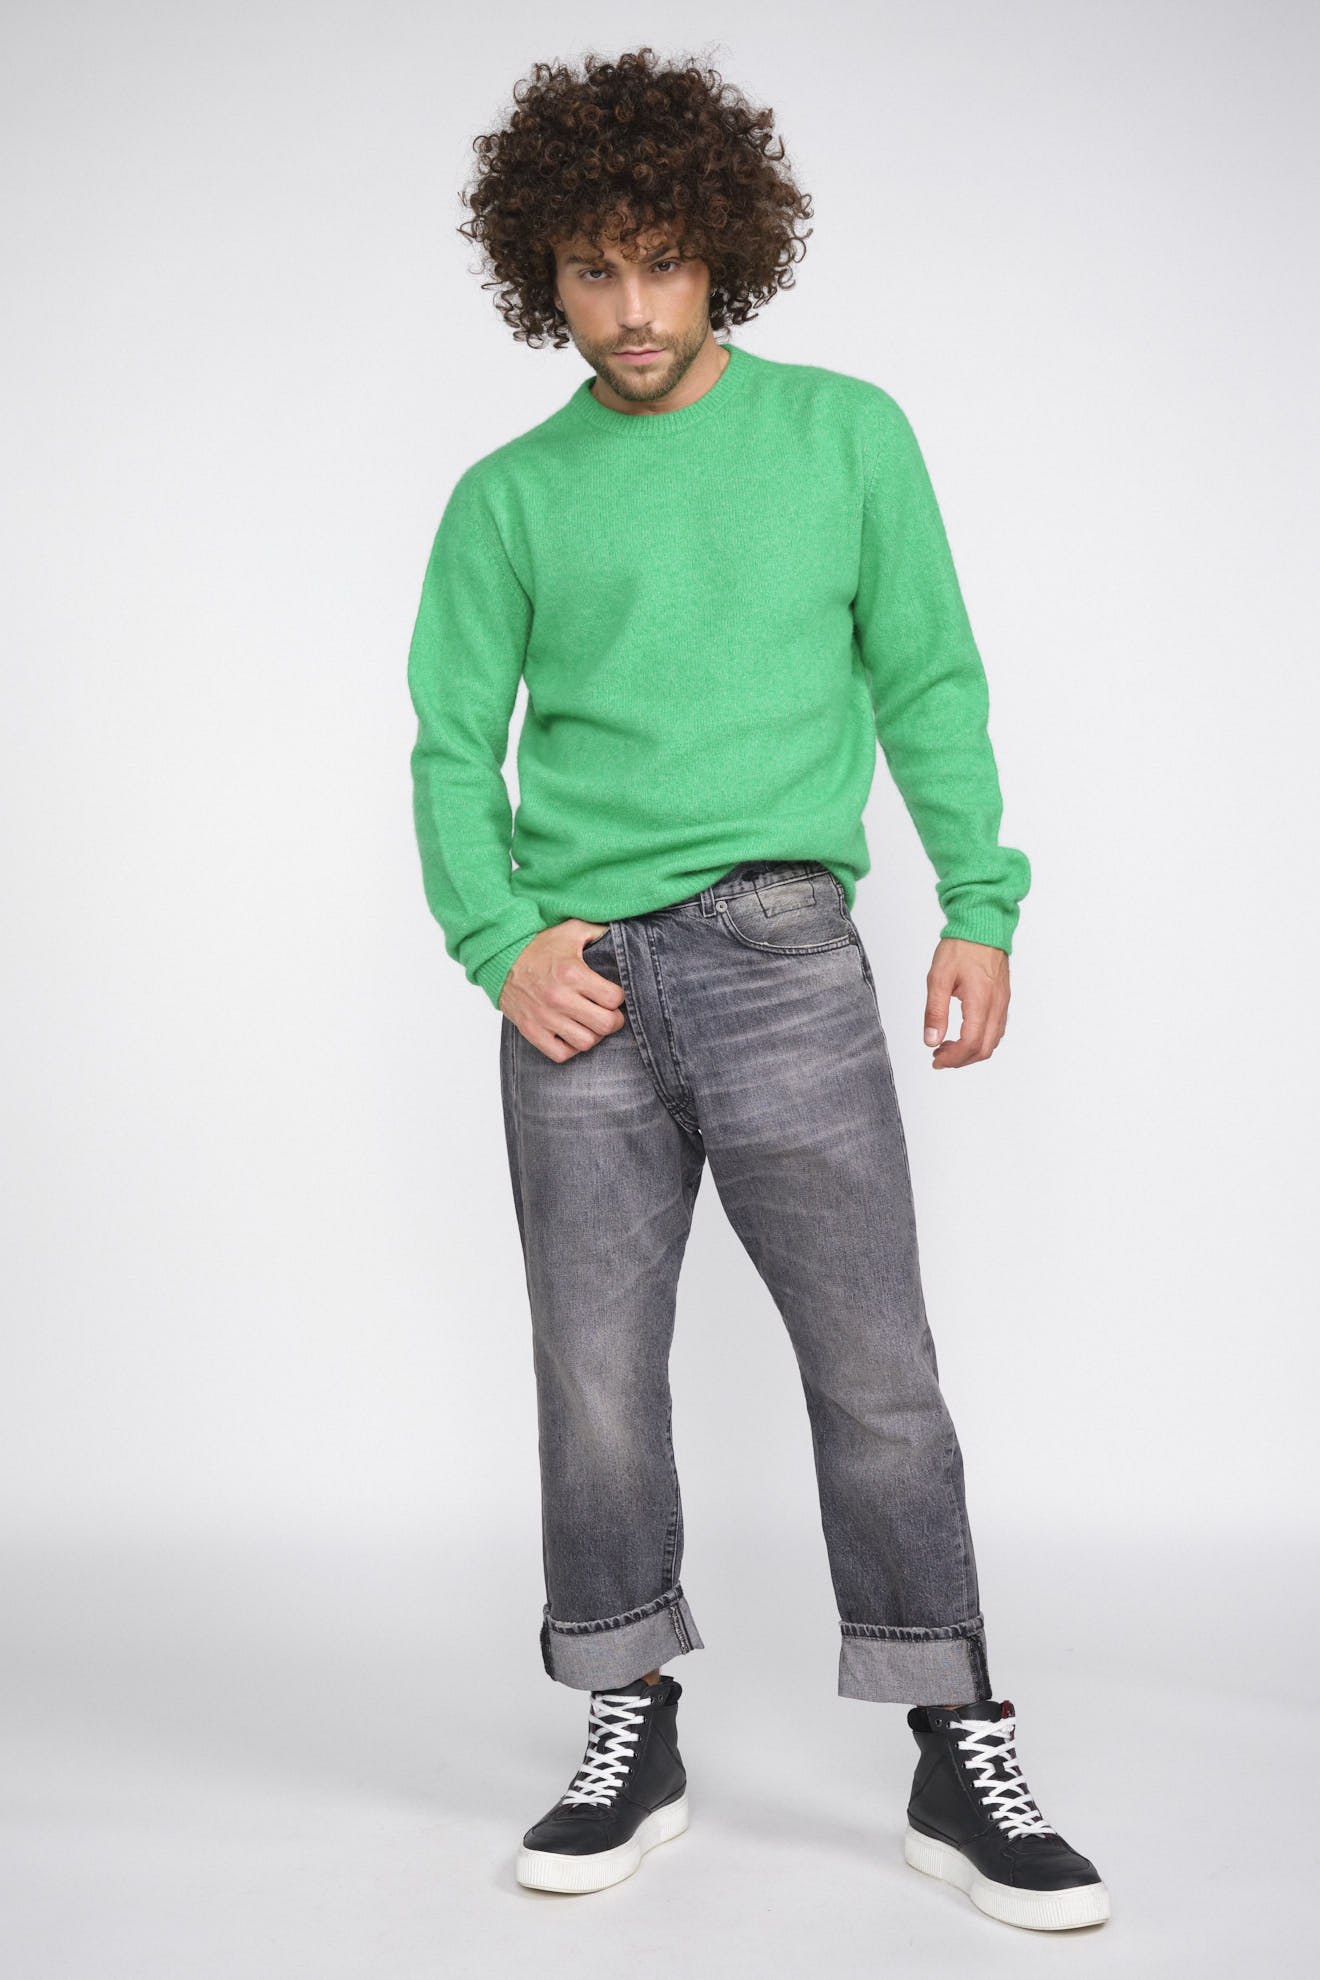 Roberto Collina Girocollo Knit green 52